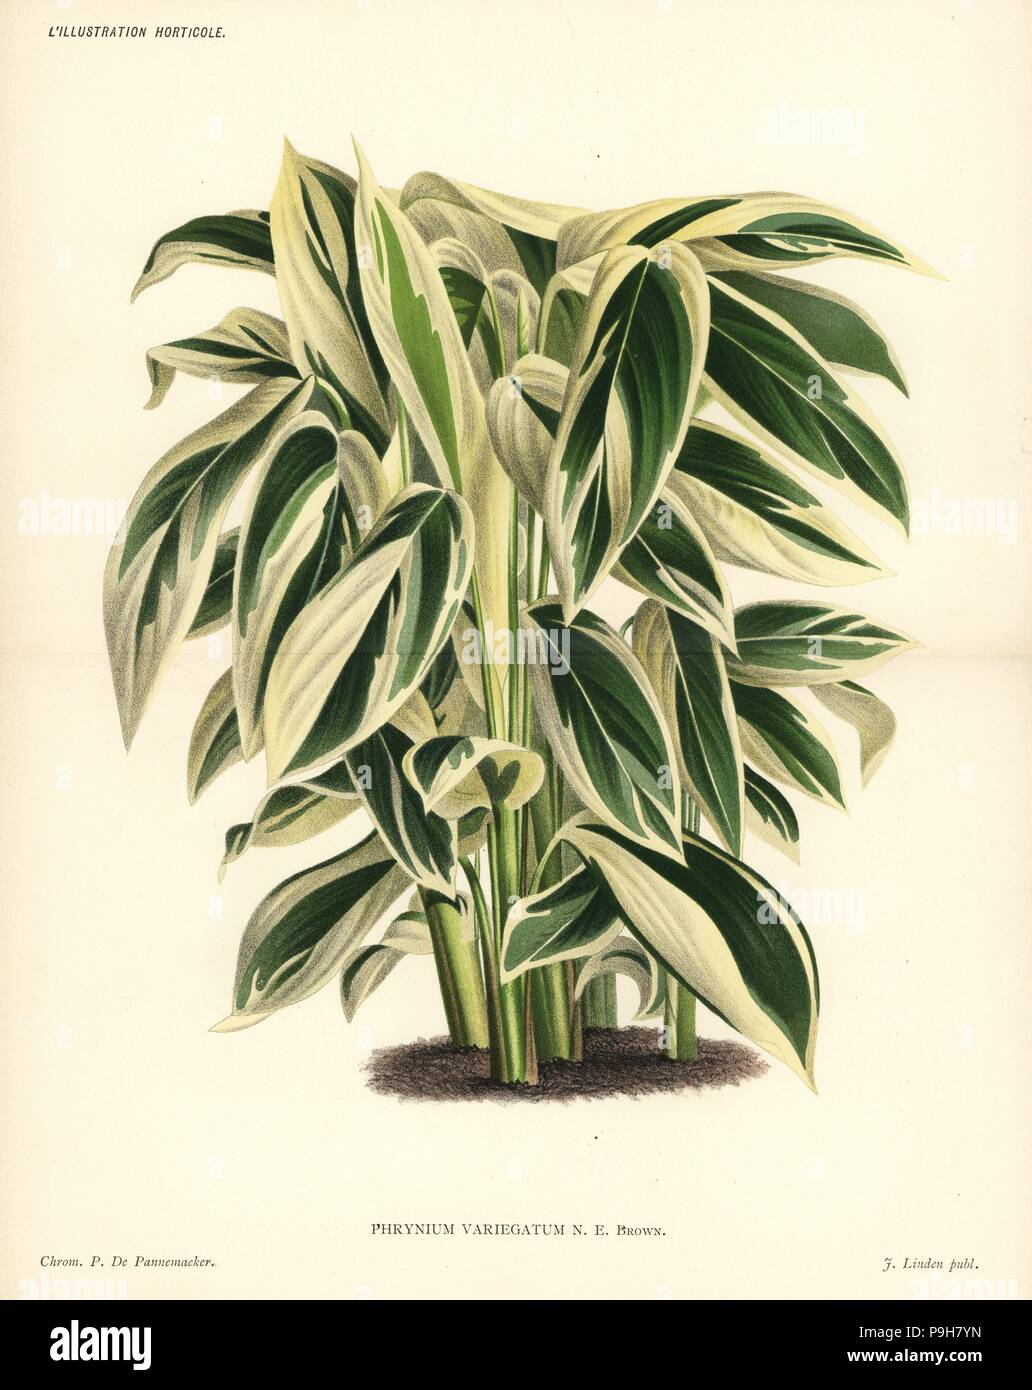 Maranta or arrowroot, Maranta arundinacea (Phrynium variegatum). Chromolithograph by Pieter de Pannemaeker from Jean Linden's l'Illustration Horticole, Brussels, 1885. Stock Photo